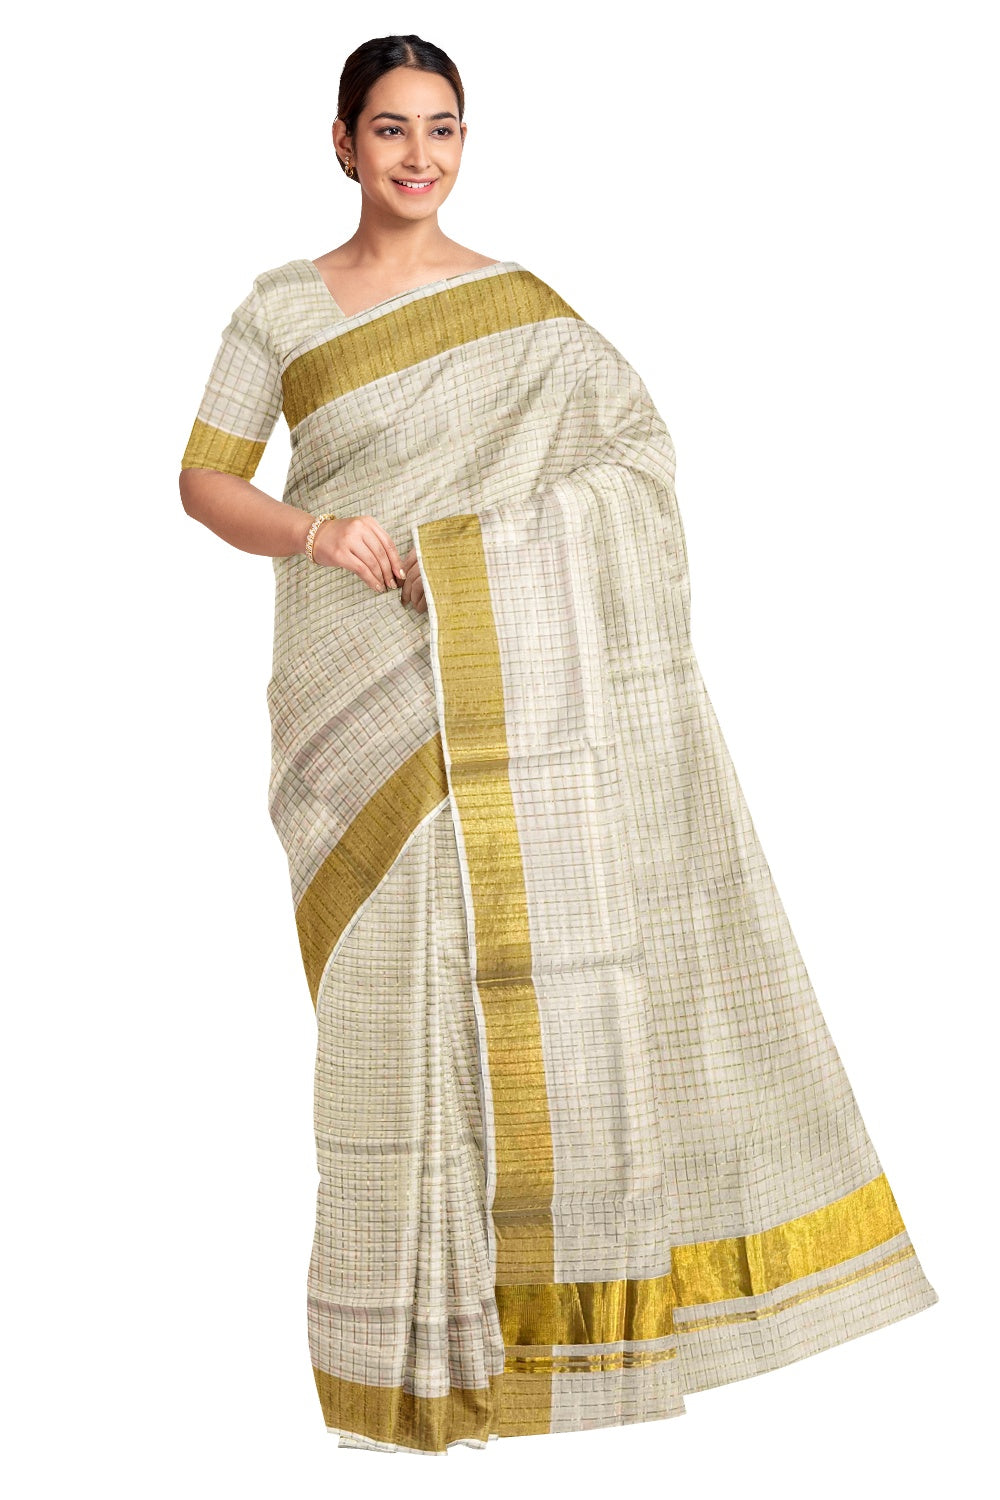 Southloom Premium Handloom Kerala Saree with Kasavu Check Design across Body